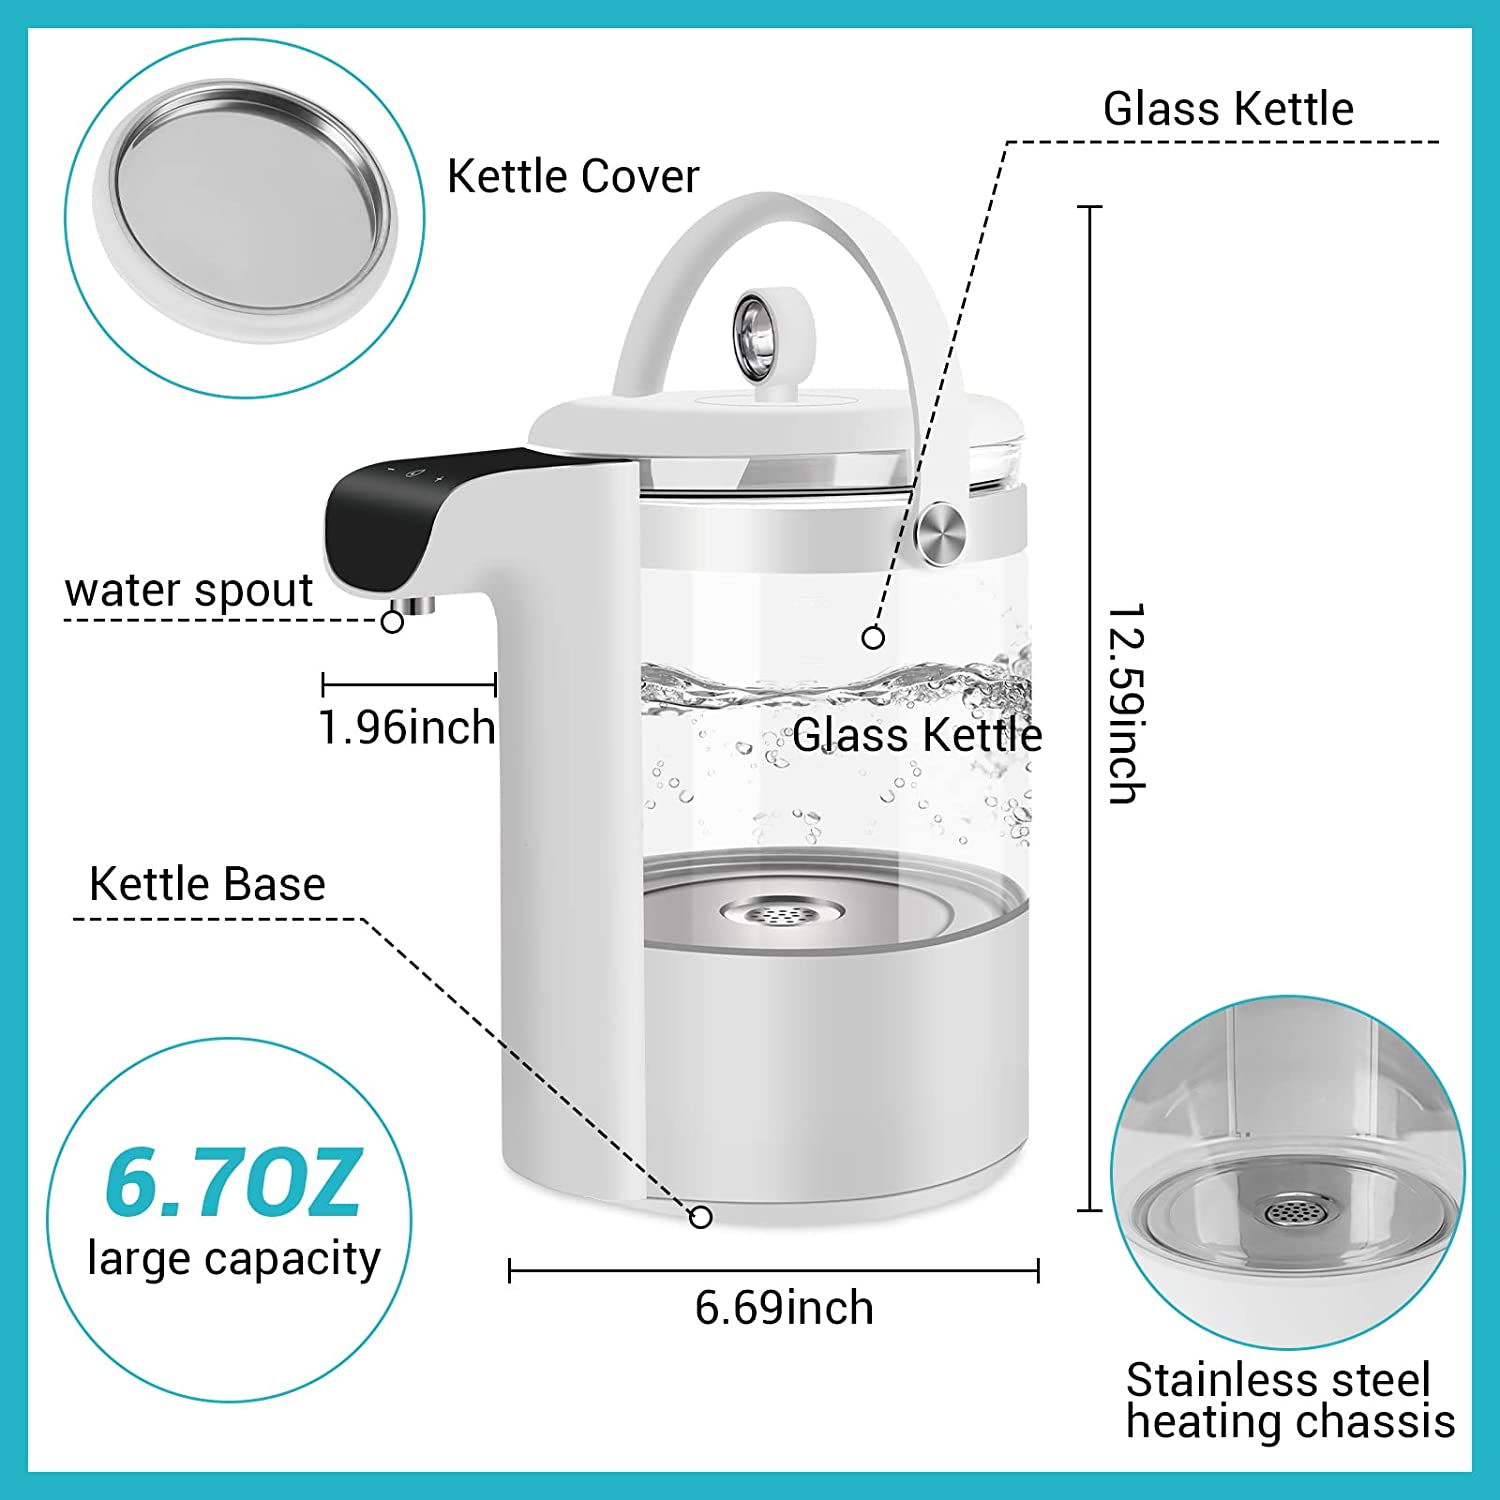 Baby Exo Instant Warm Water Dispenser for Baby Bottle - Kettle-TN1809